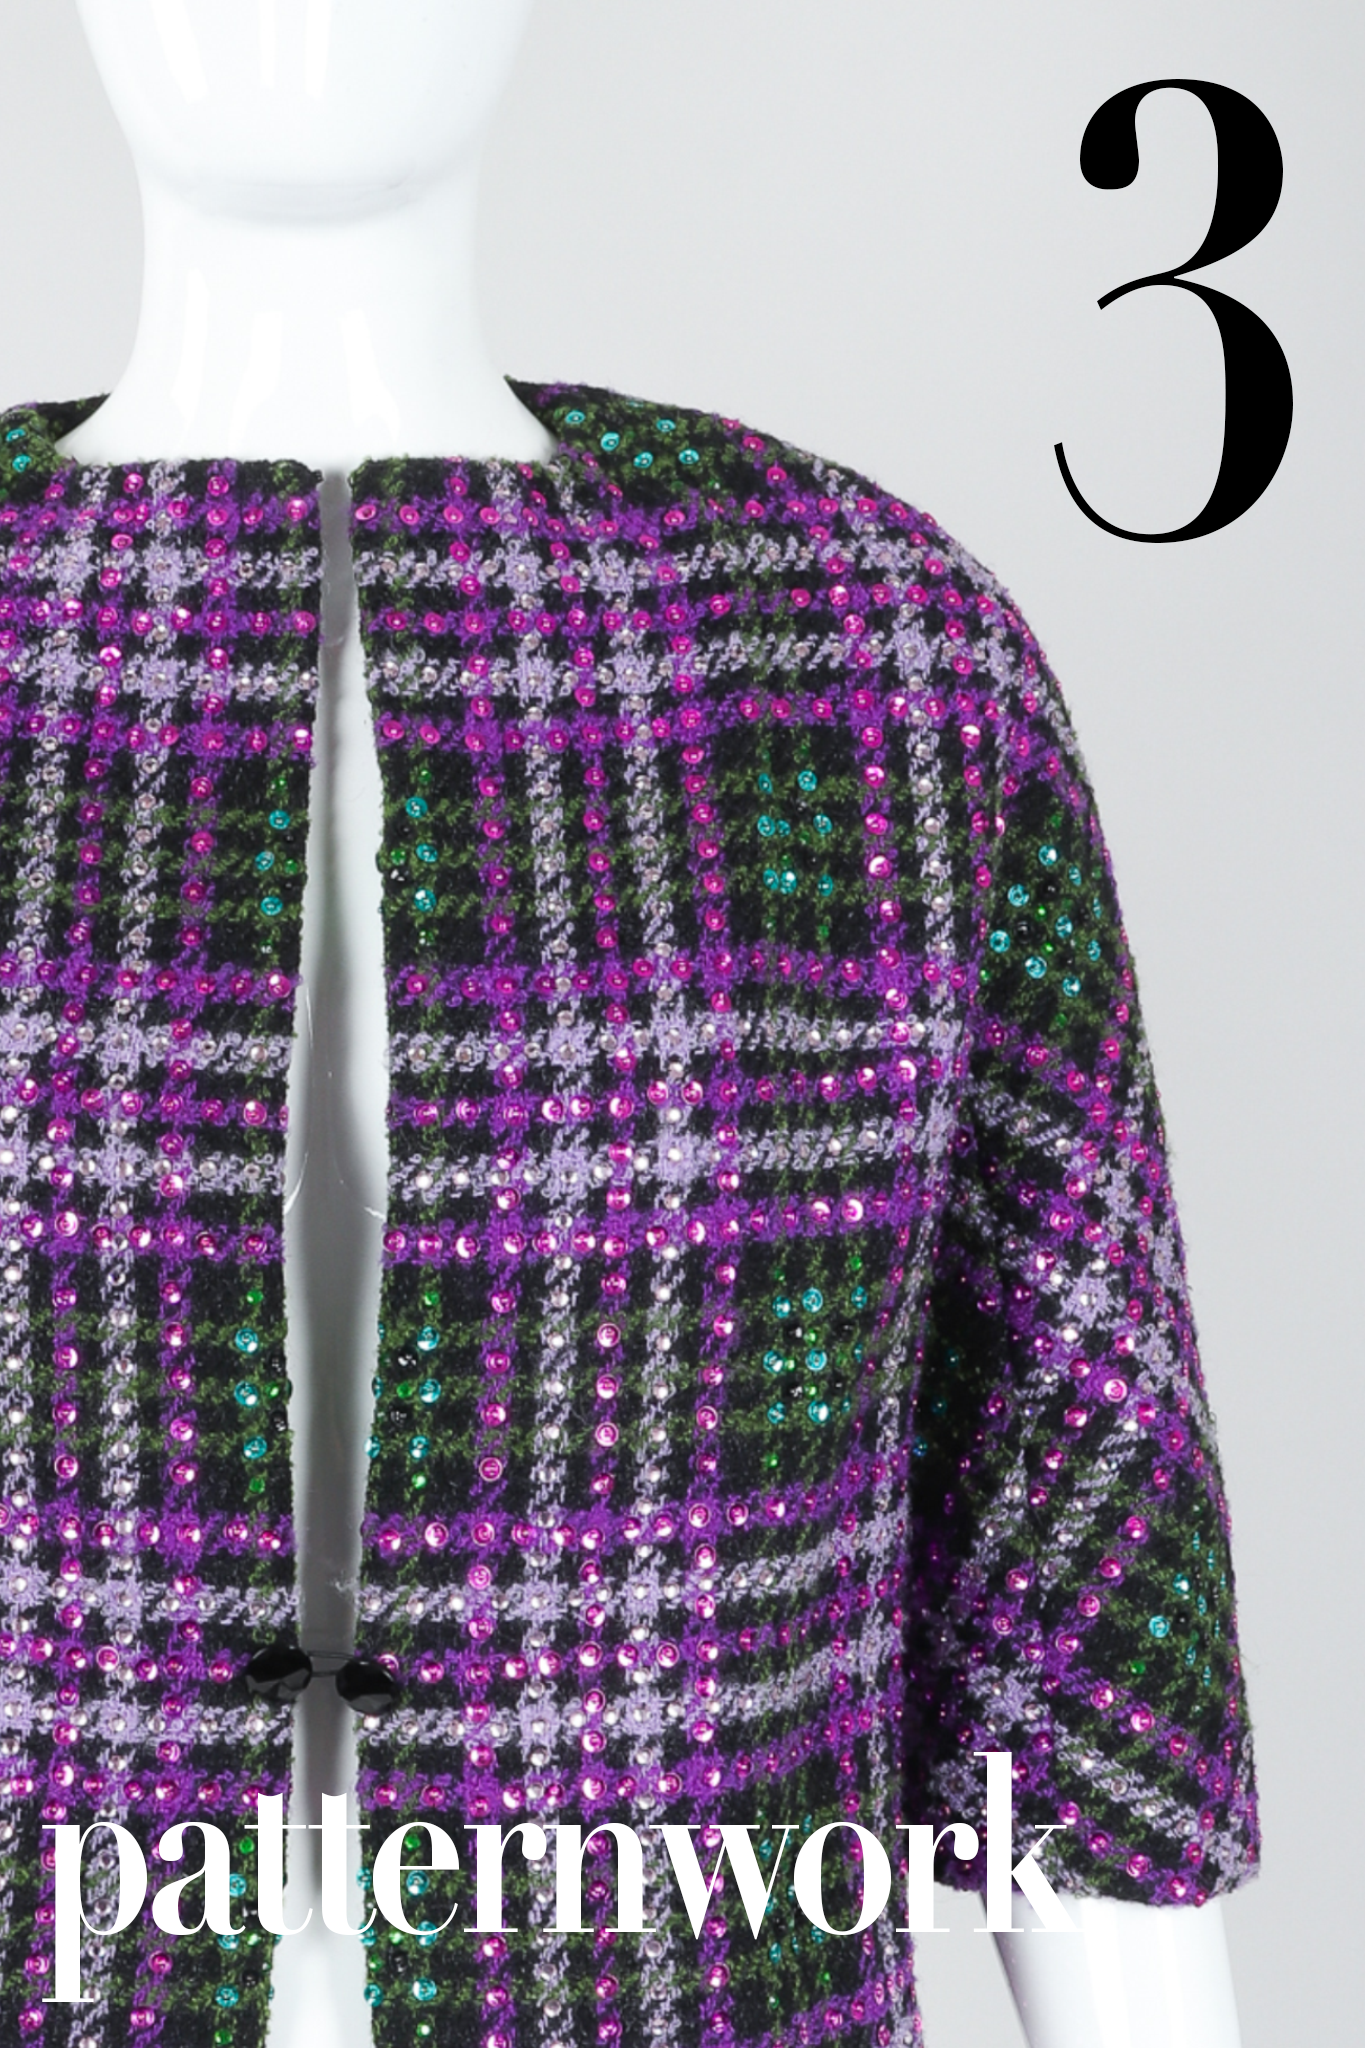 Recess DressCode 3. patternwork: vintage oleg cassini beaded plaid boxy jacket on mannequin